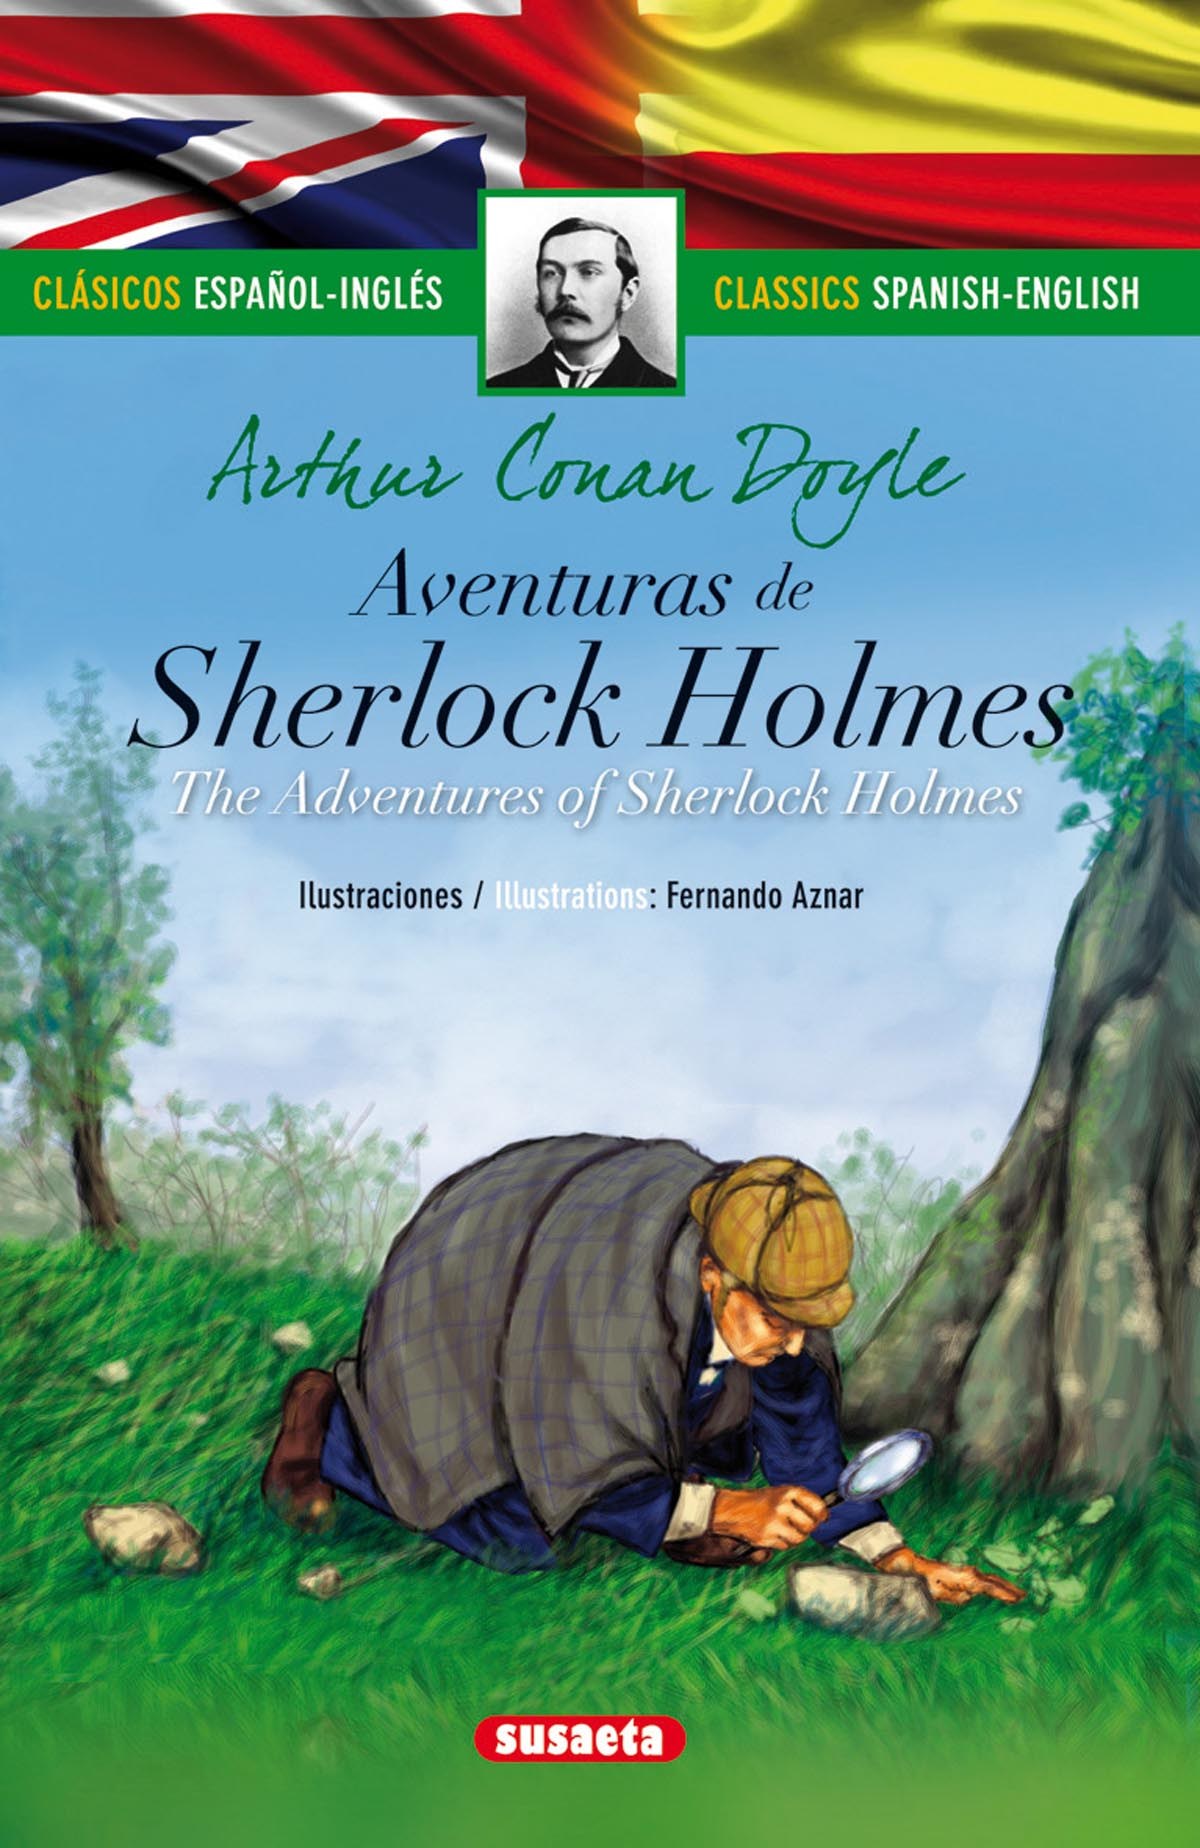 Aventuras de Sherlock Holmes / The Adventures of Sherlock Holmes - Conan Doyle, Arthur